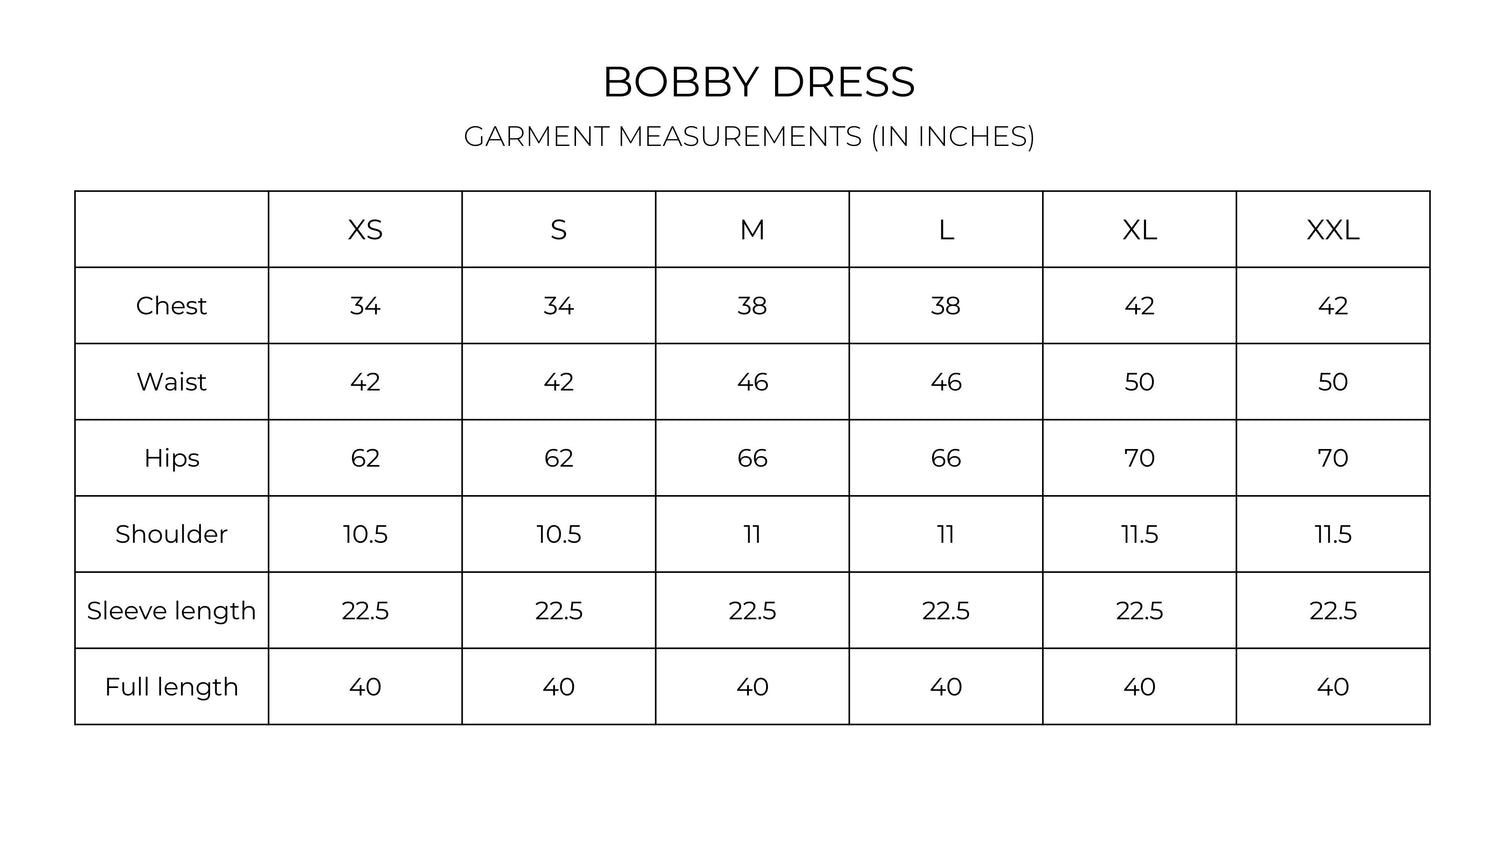 Bobby Dress